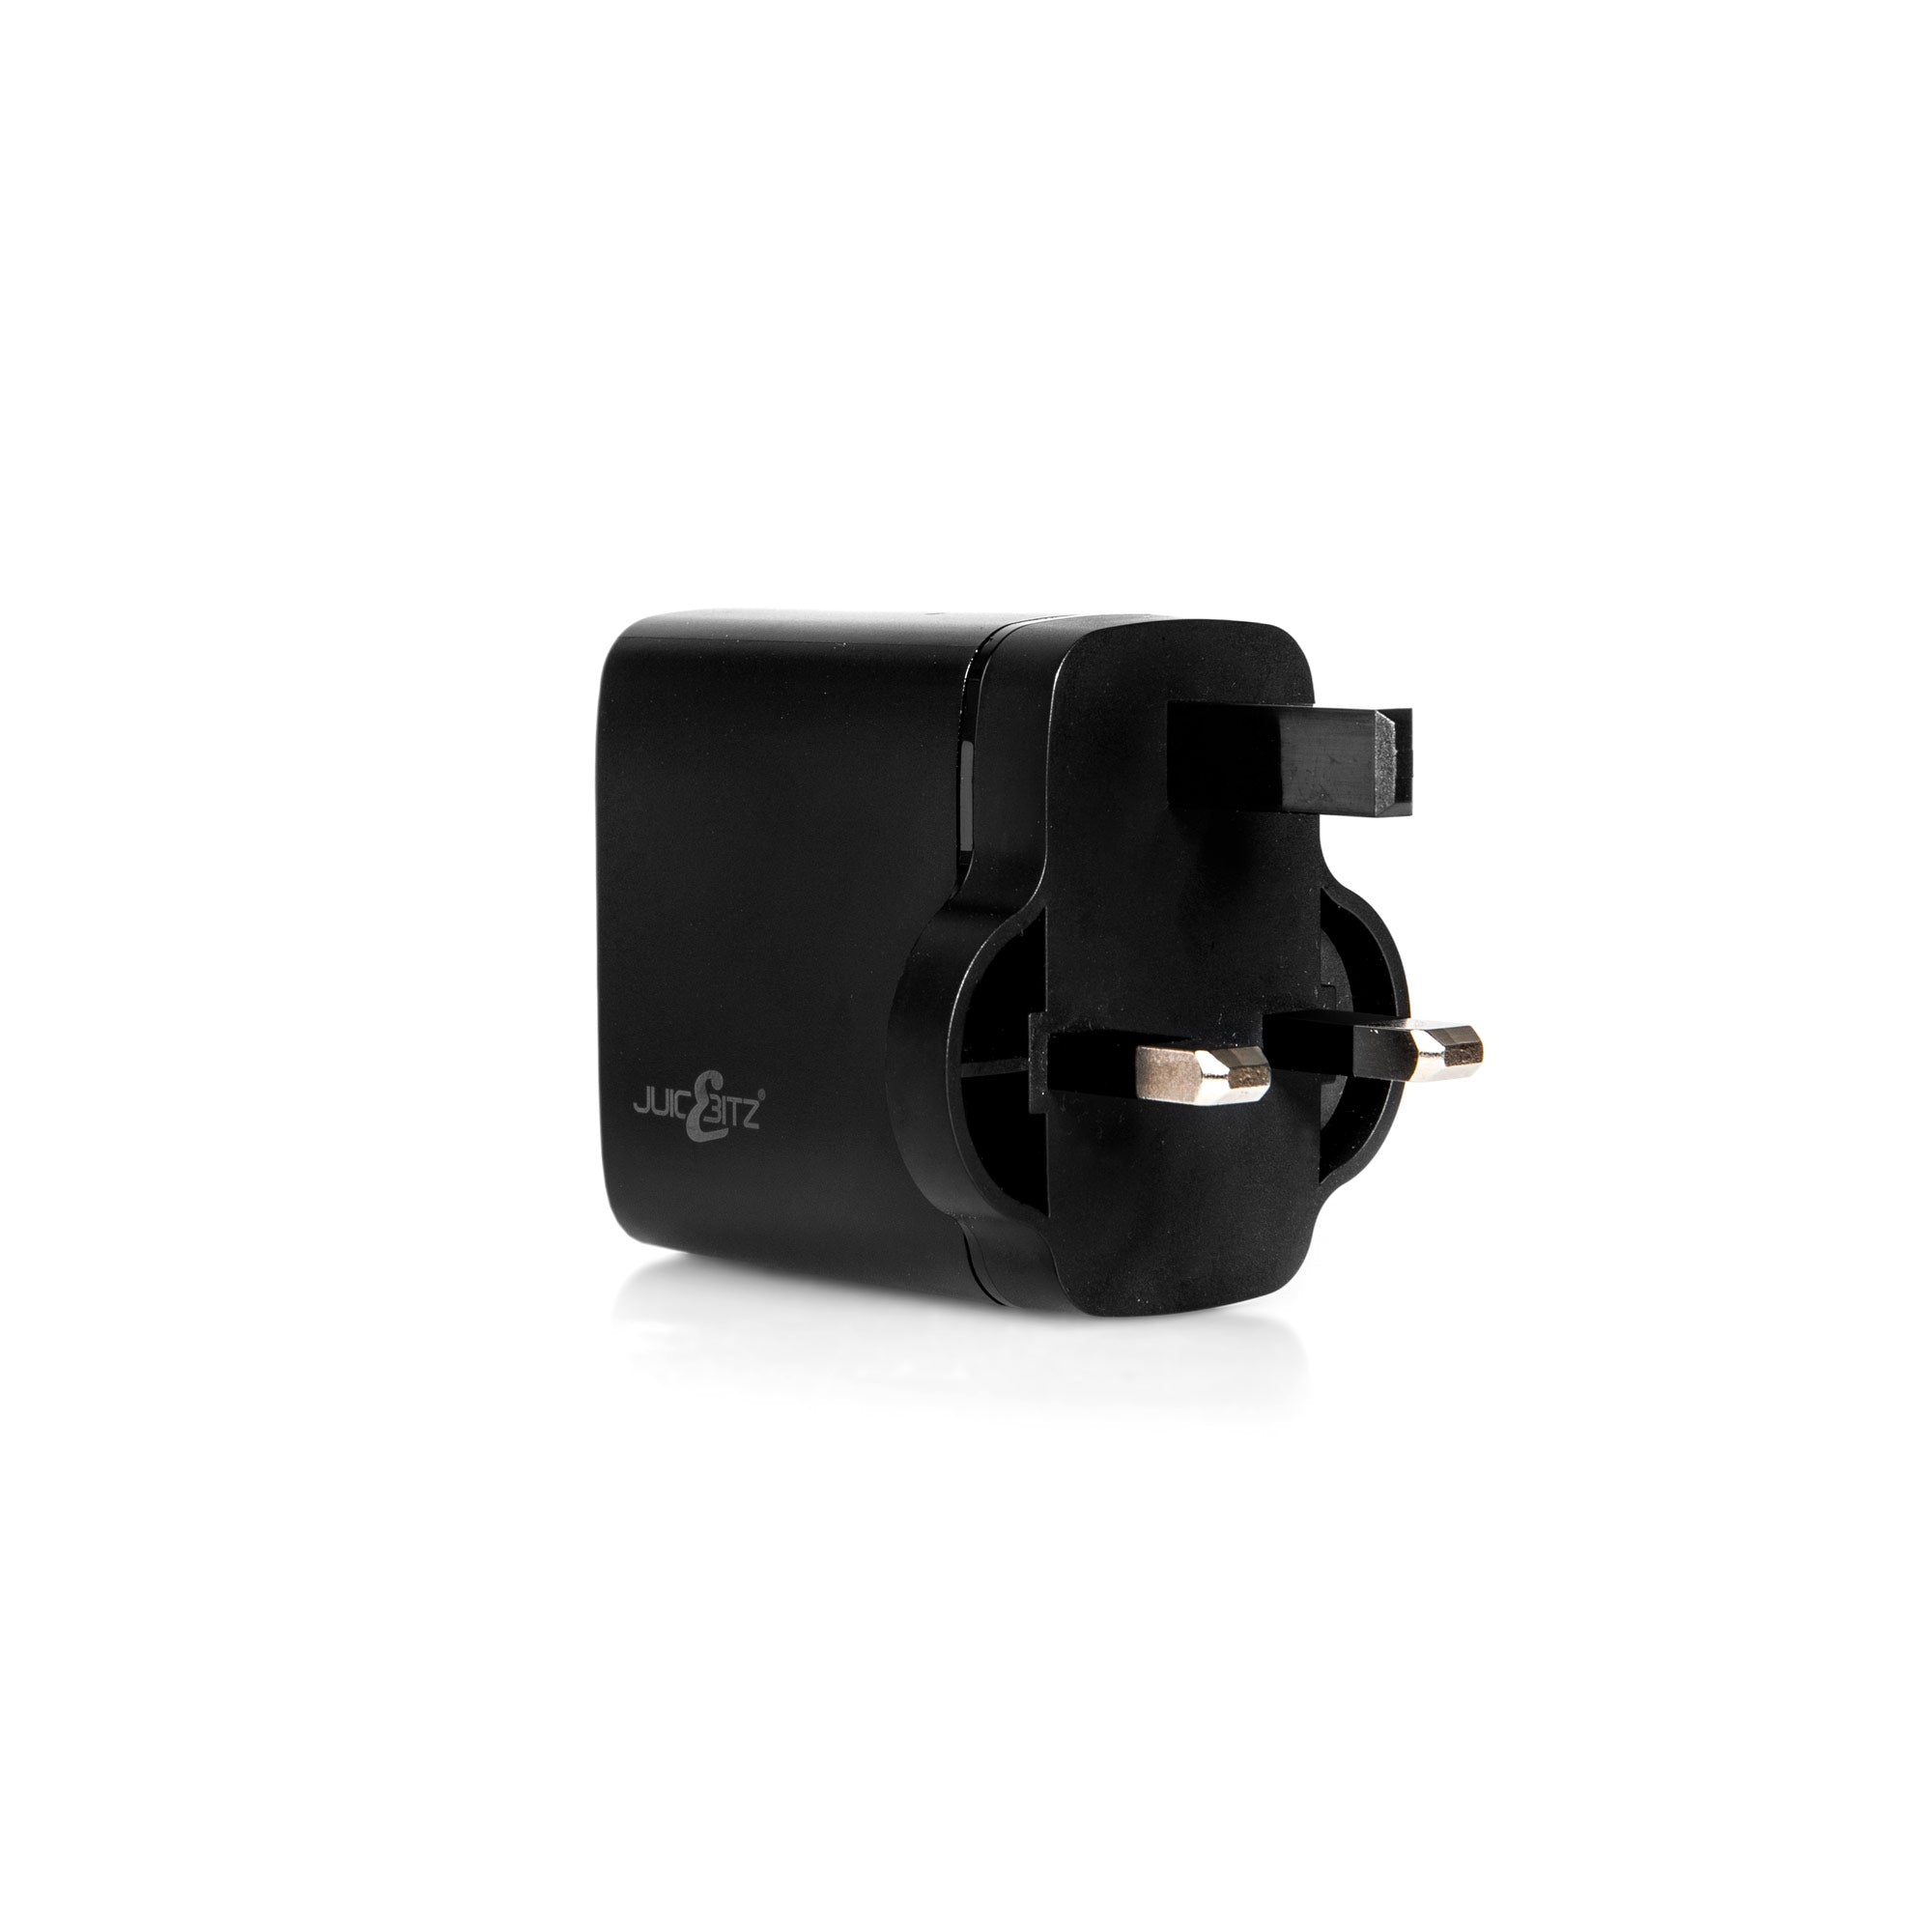 JuicEBrick™ 38W Dual Port QC3.0 USB + PD3.0 USB-C Fast Charger Mains Adapter UK Plug - Black